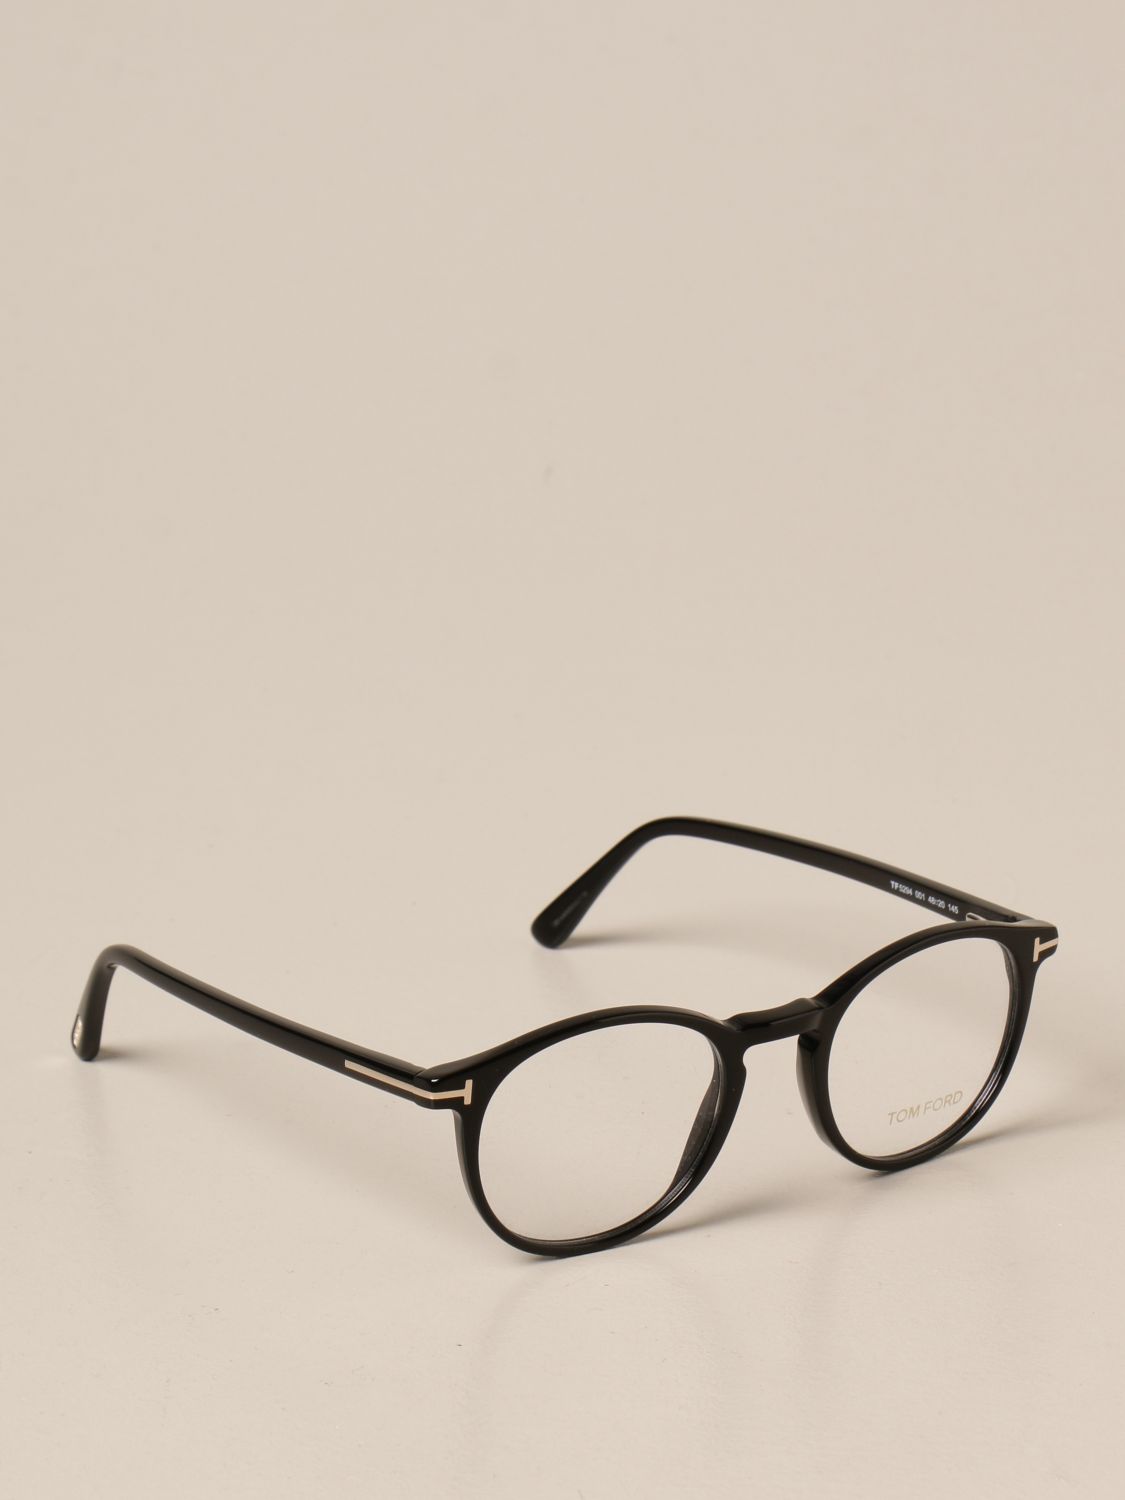 Gafas Tom Ford: Gafas hombre Tom Ford negro 1